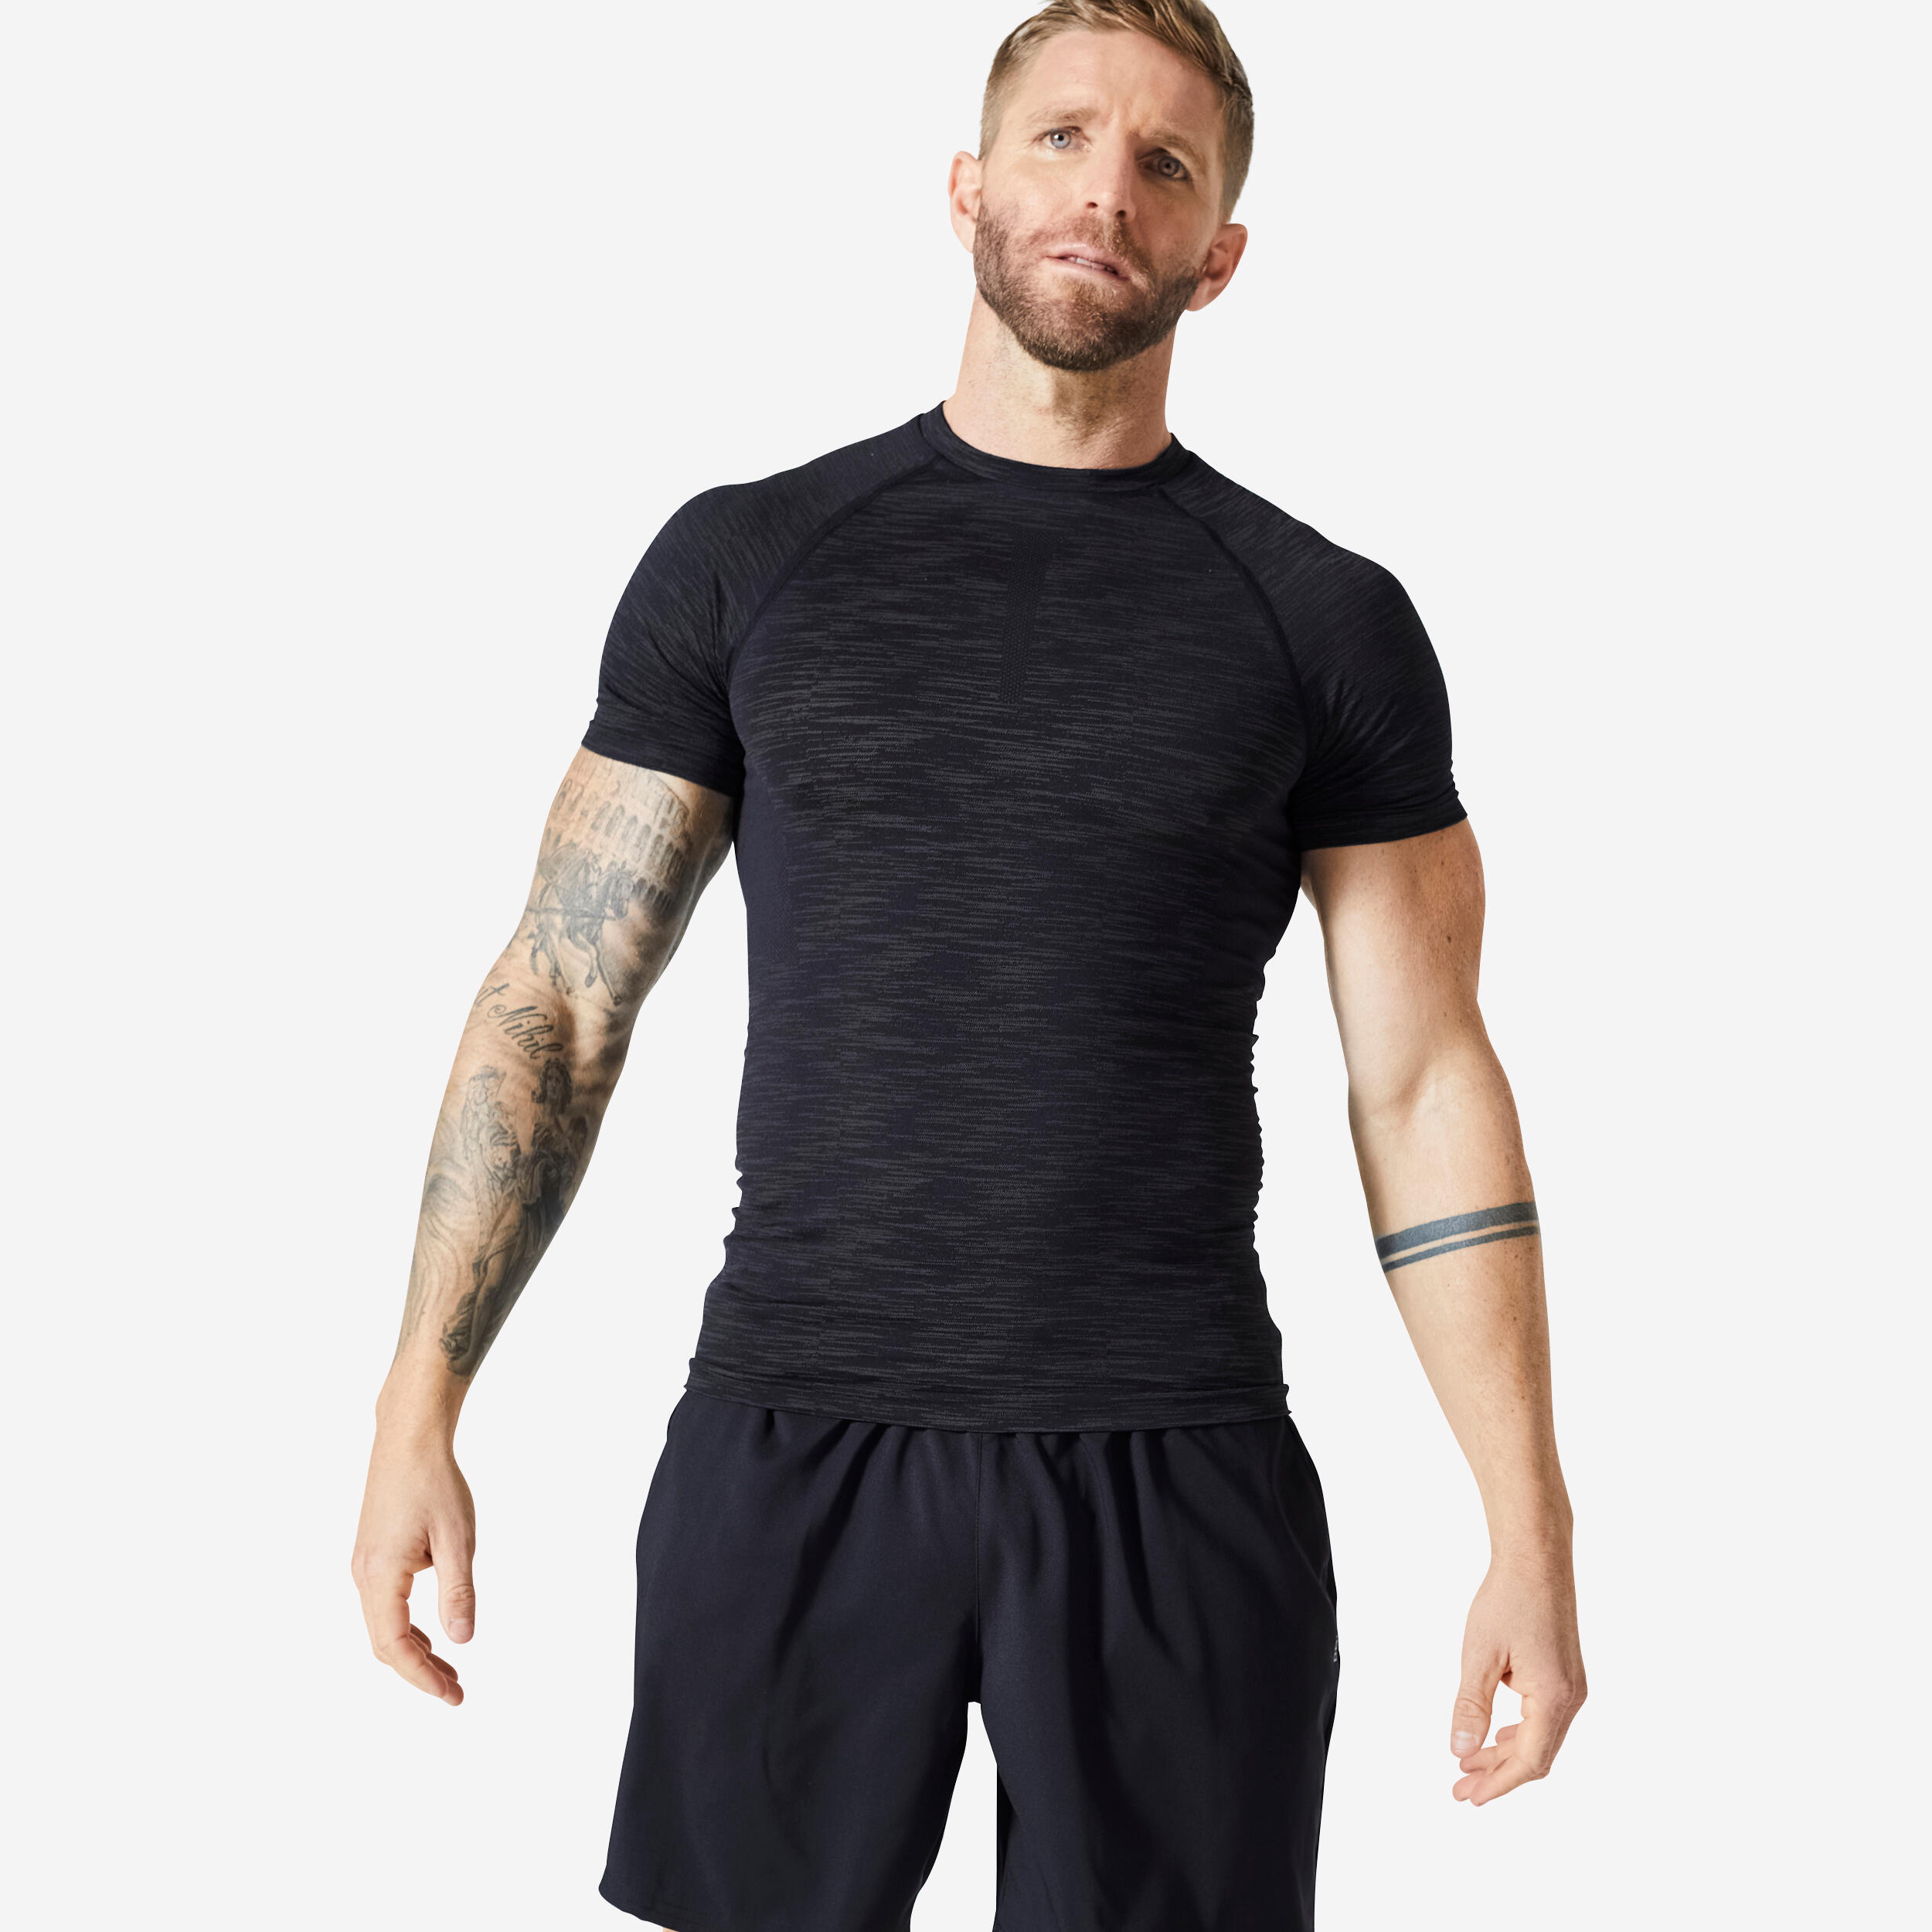 DOMYOS Short-Sleeved Crew Neck Weight Training Compression T-Shirt - Black/Khaki